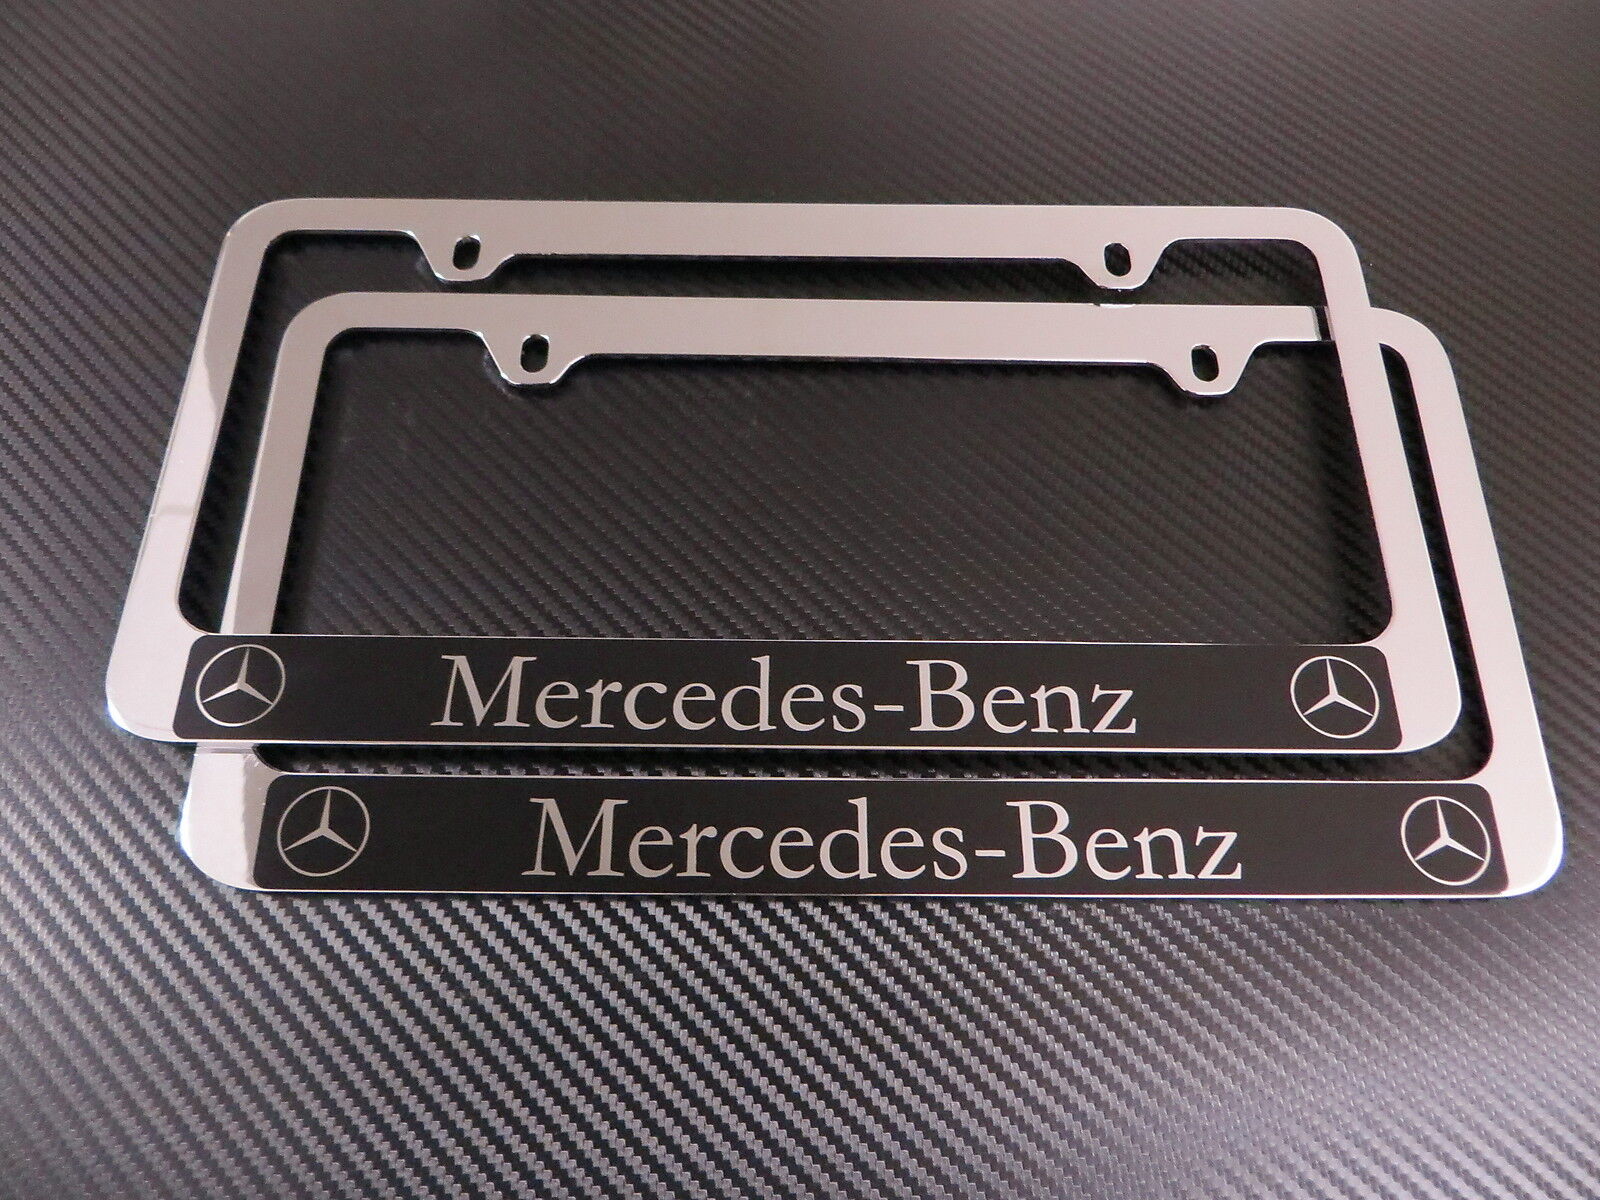 2 Brand New Mercedes-Benz HALO chromed METAL license plate frame +screw caps